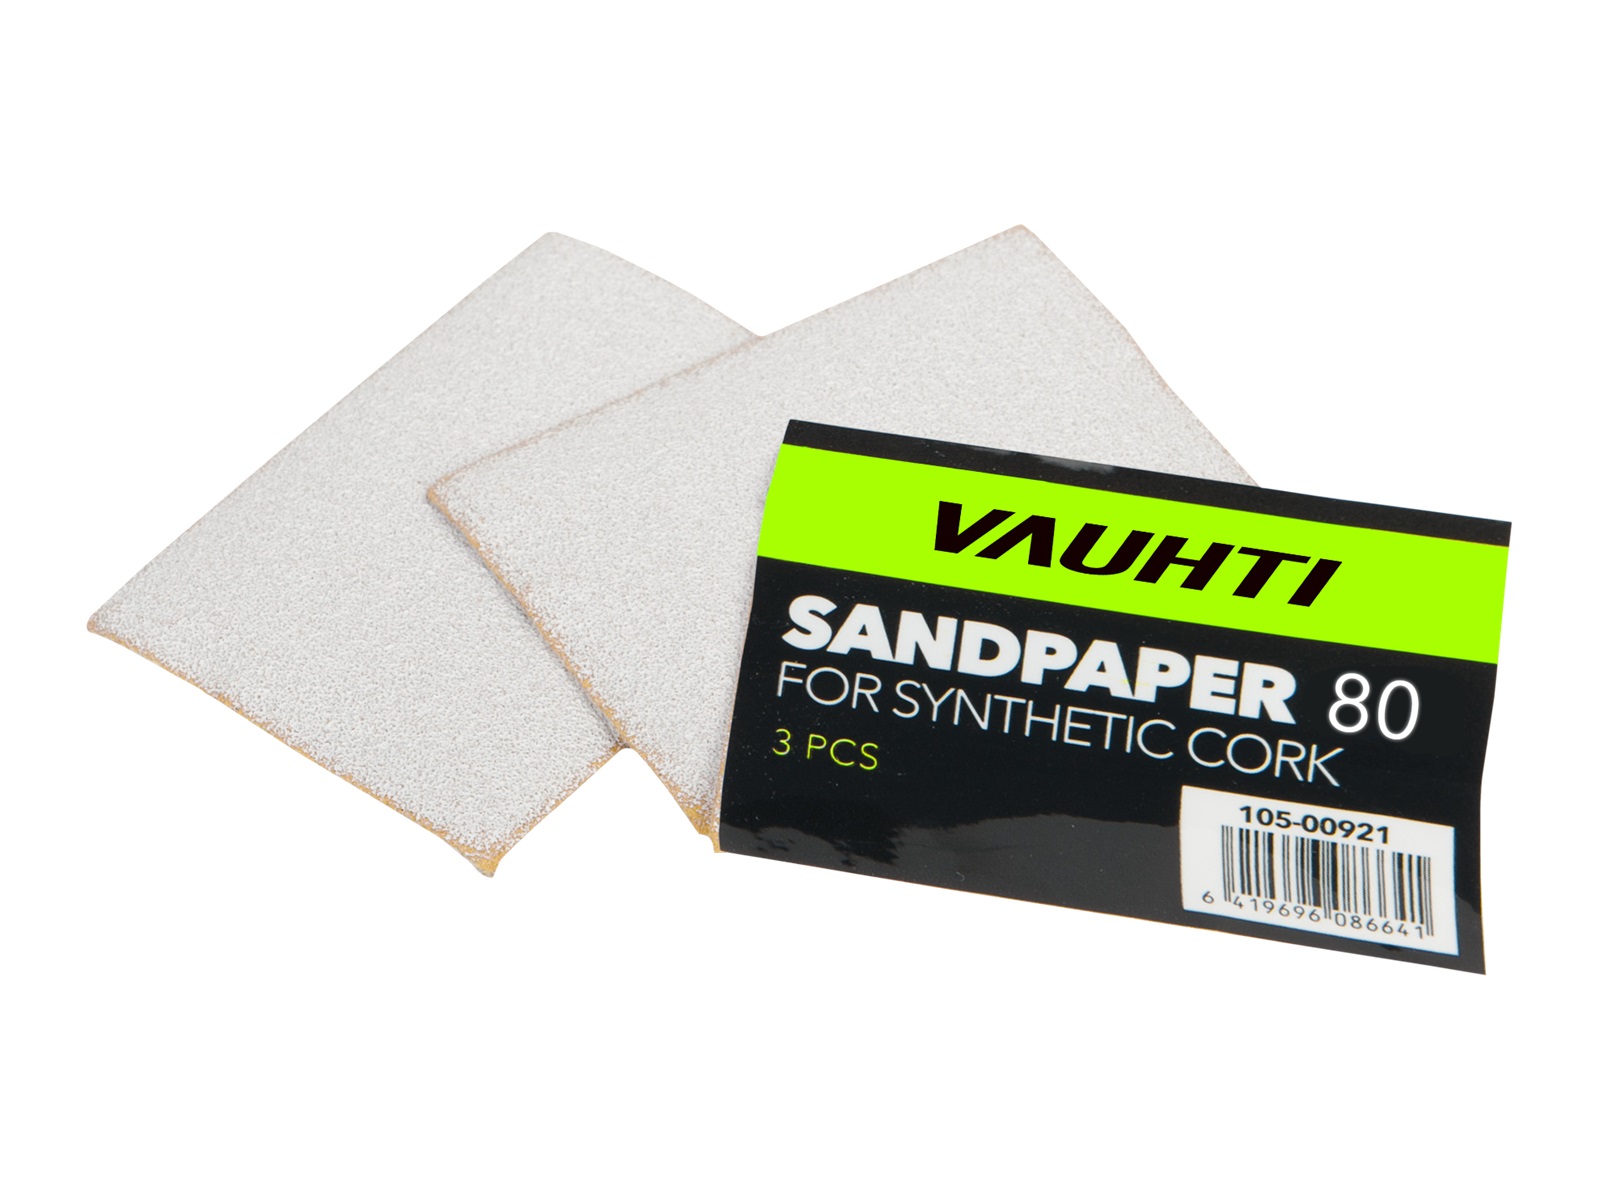 Vauhti Sandpaper pro systetický korek 80 (3 ks)